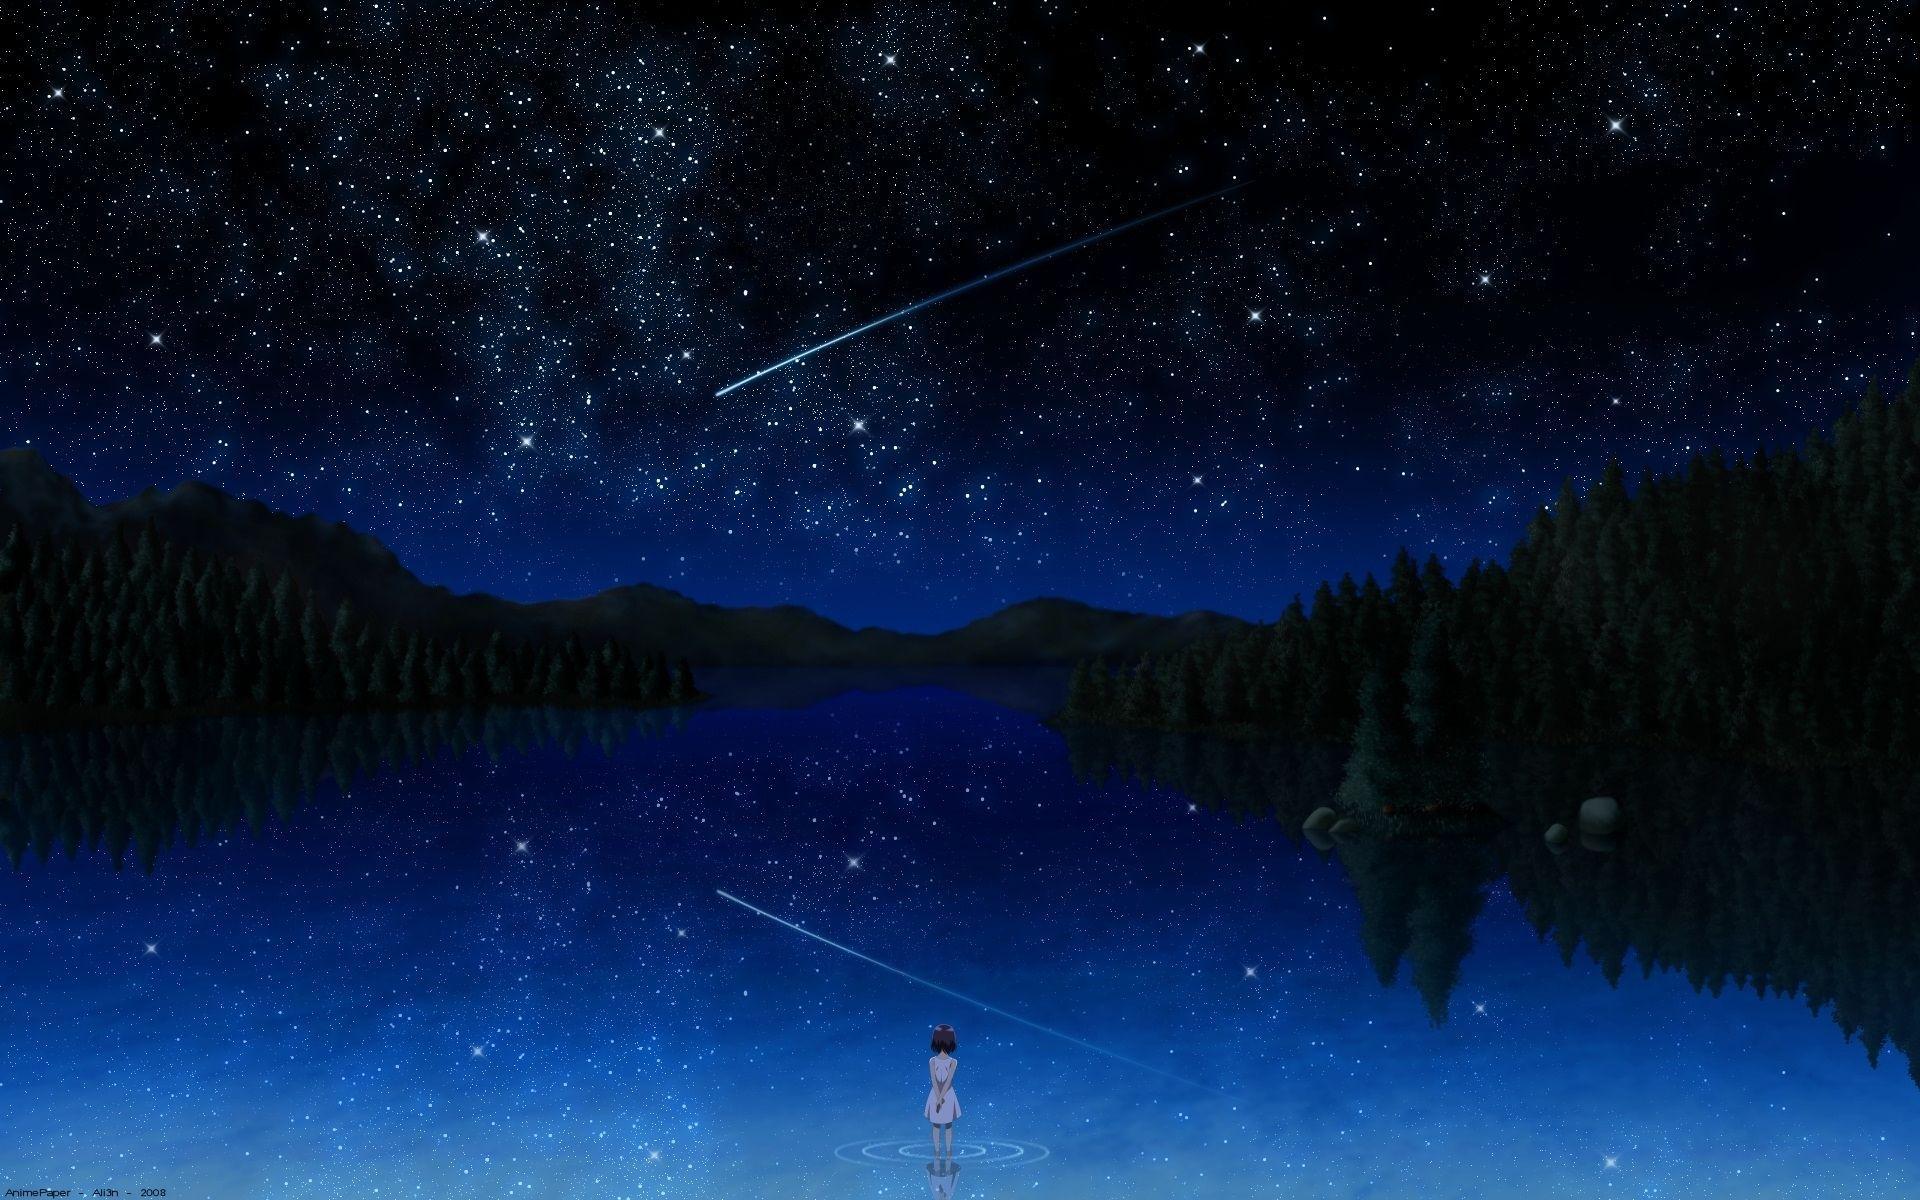 Dark Anime Scenery Wallpaper Background For Free Wallpaper. Anime scenery wallpaper, Anime scenery, Scenery wallpaper